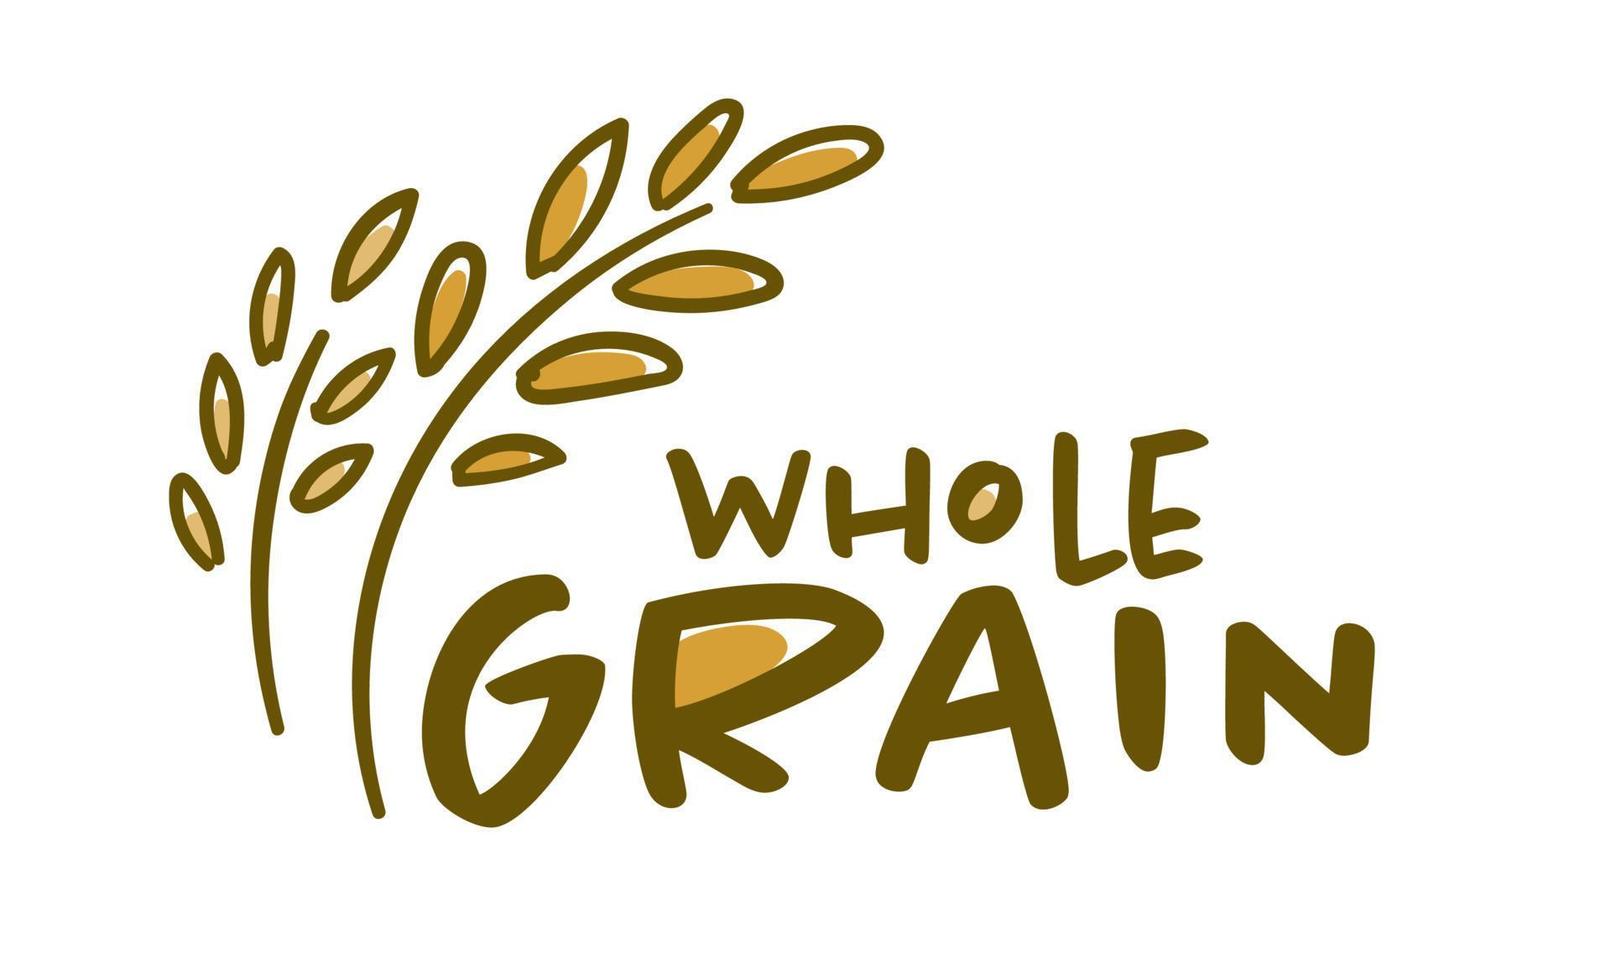 Whole grain logo, wheat spikelet product emblem vector